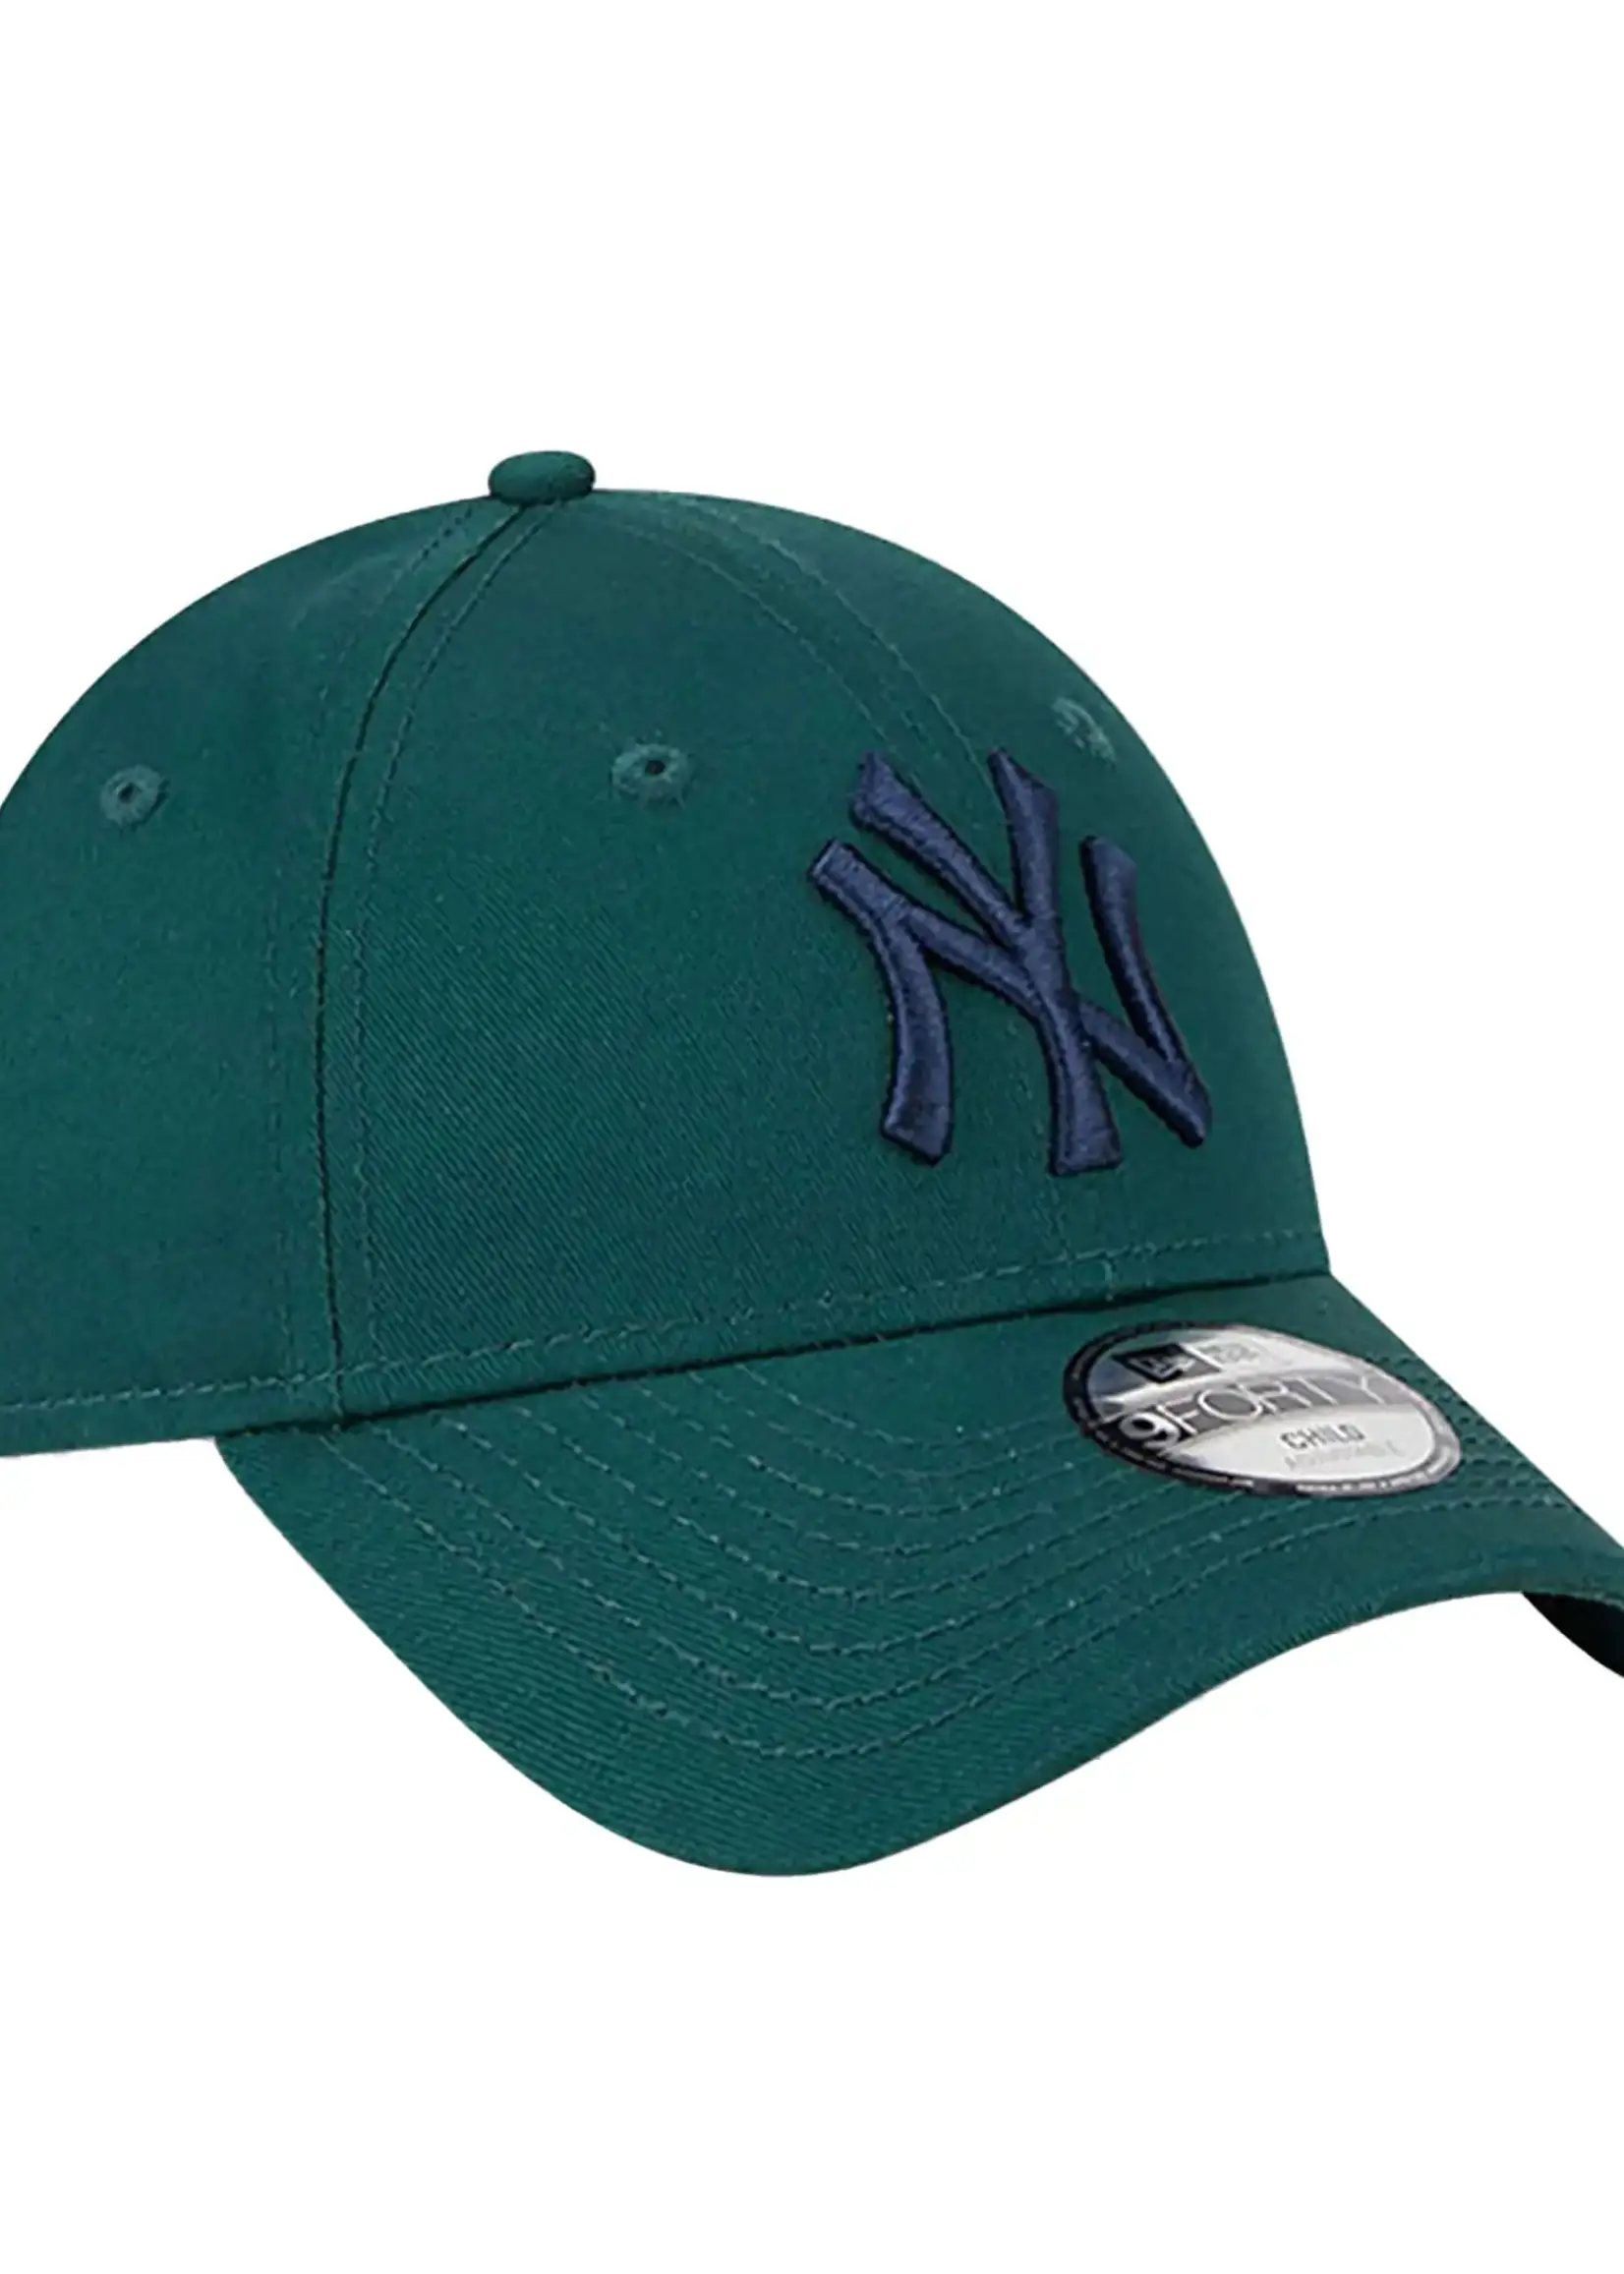 New Era New York Yankees 9Forty Child Cap Green Navy